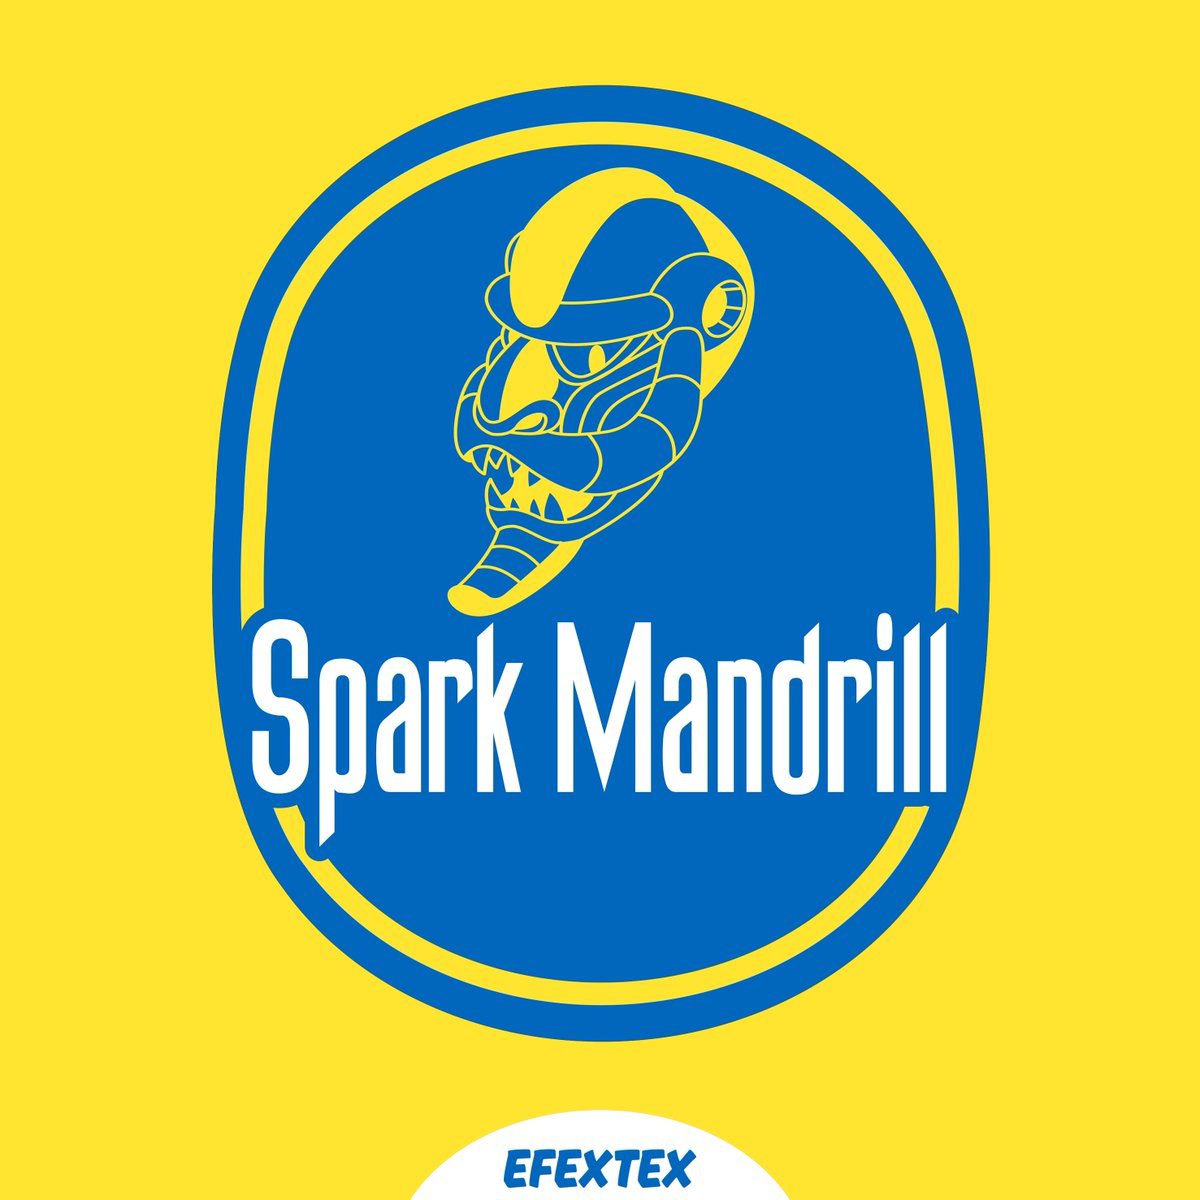 Handle Spark Mandrill with care 🍌 (Chiquita parody ) #MEGAMAN #ロックマン